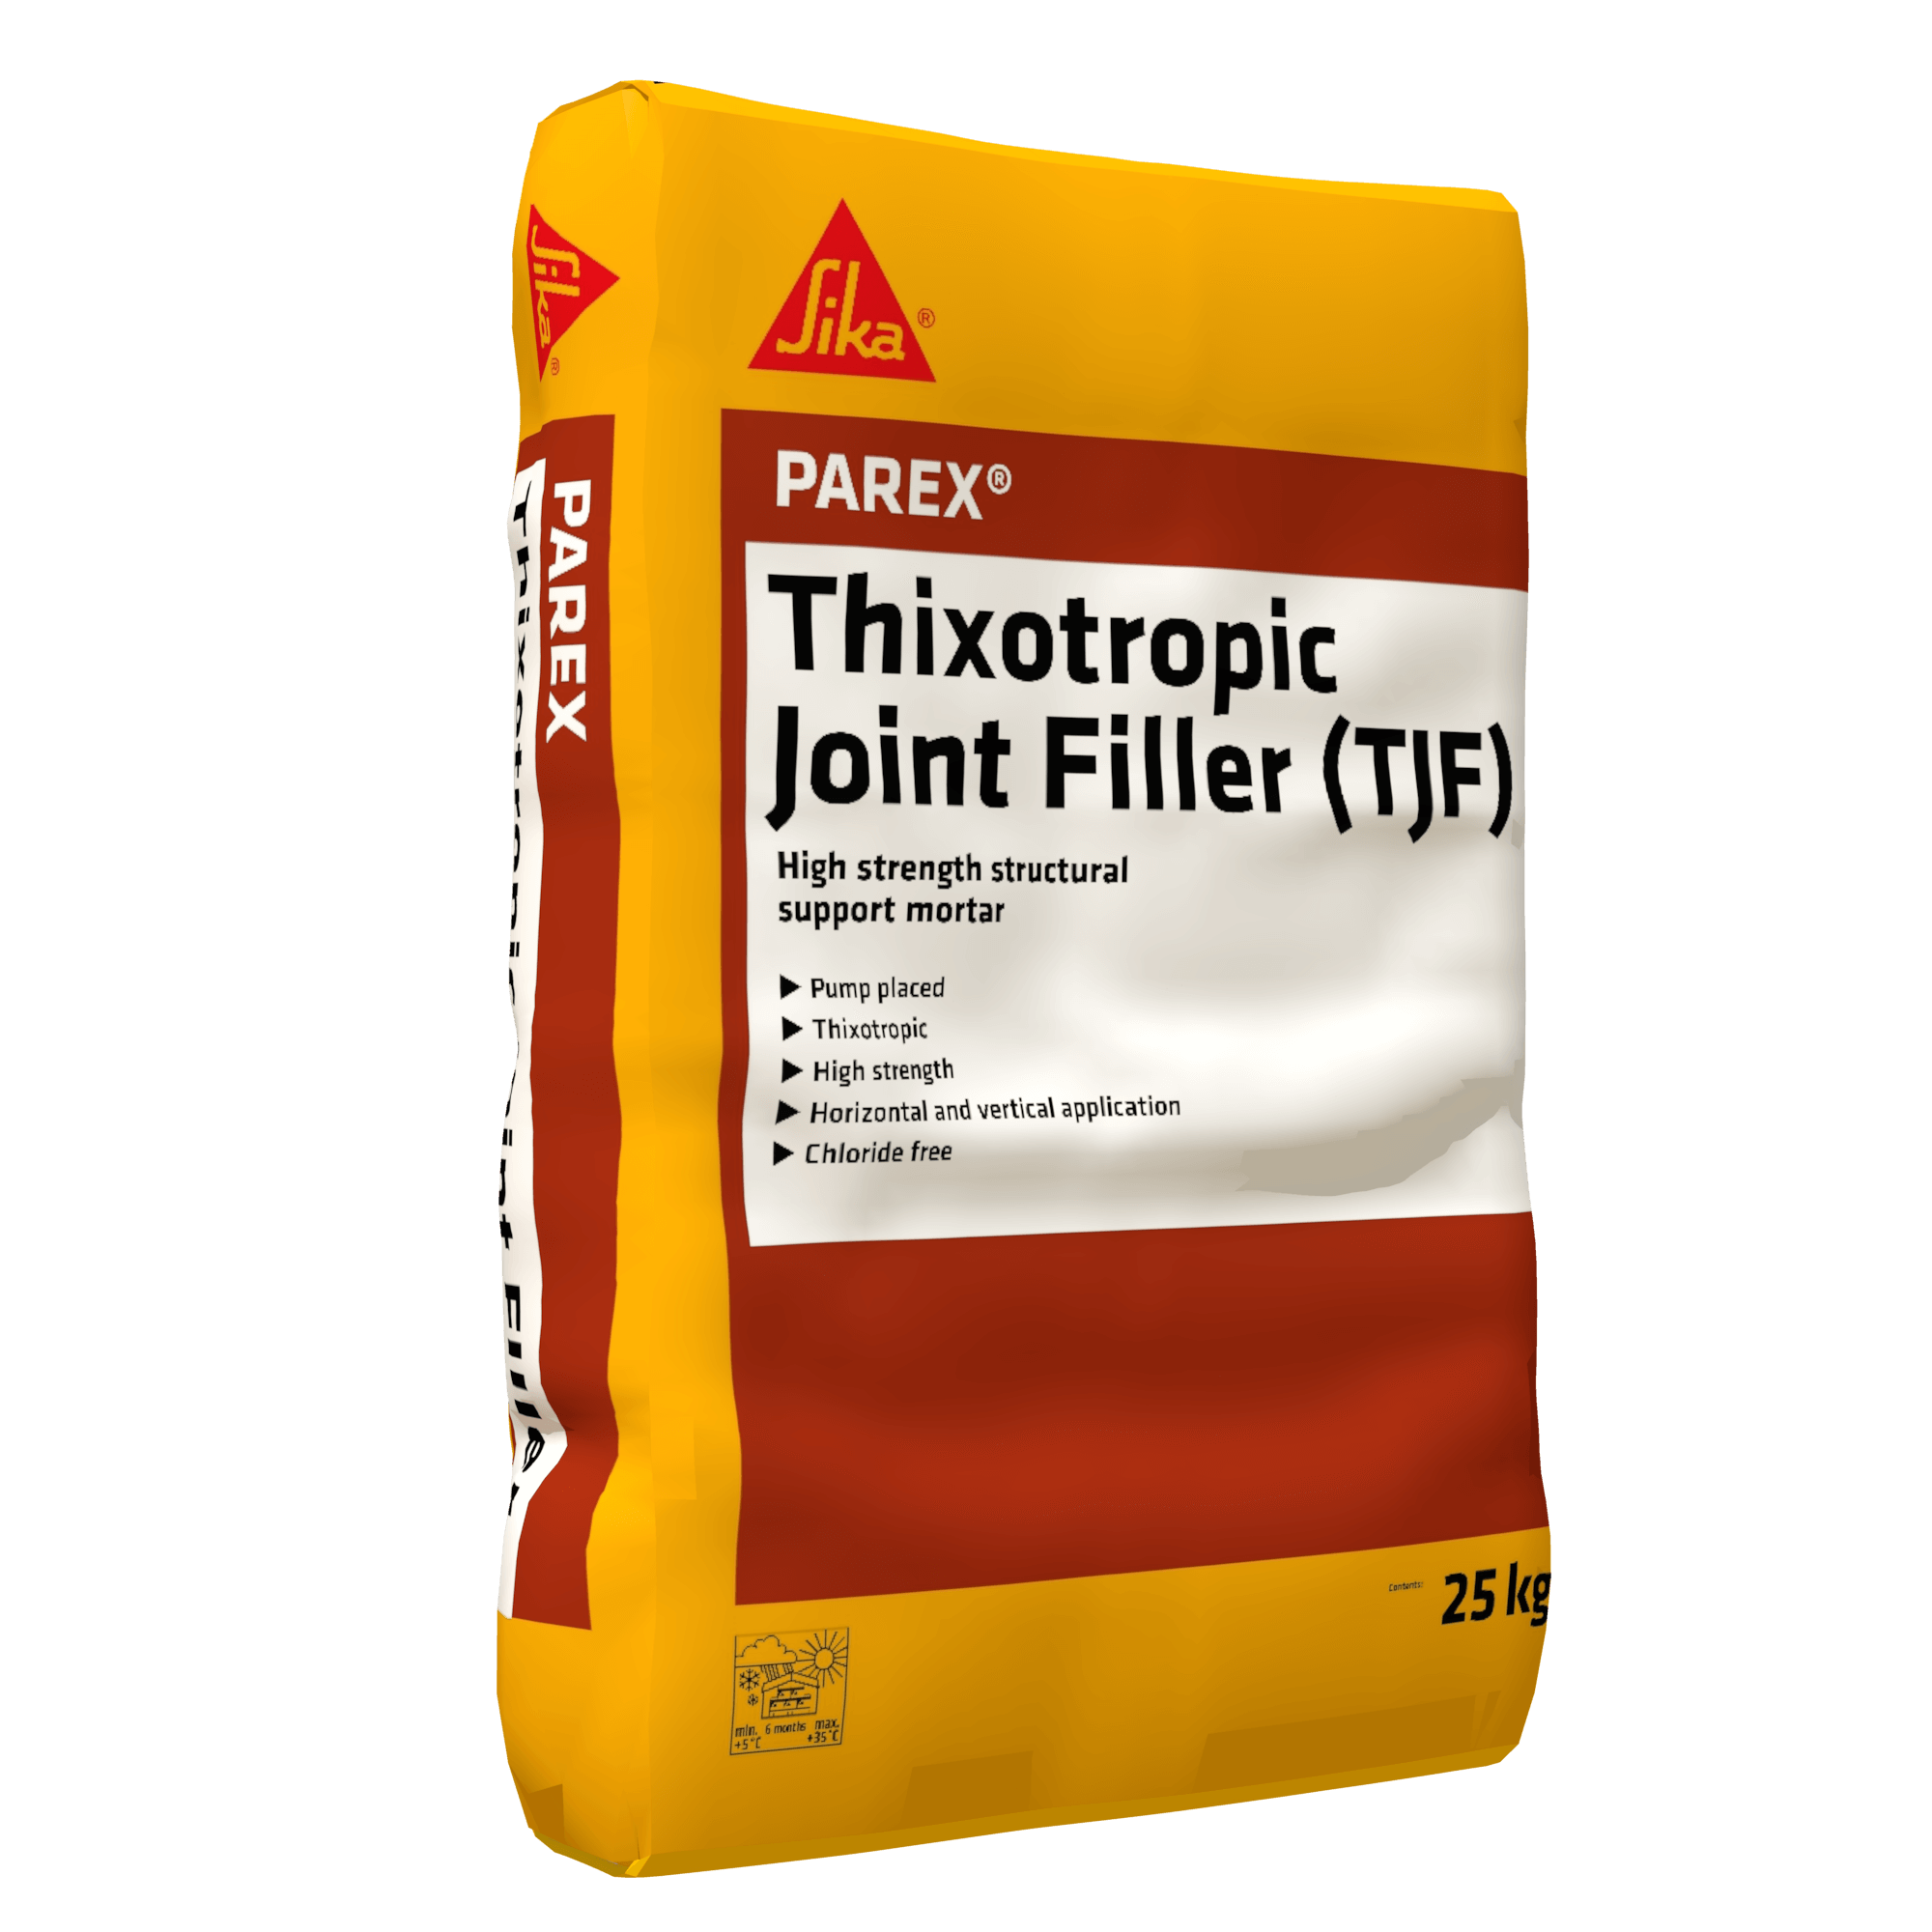 Parex Thixtropic Joint Filler (TF)